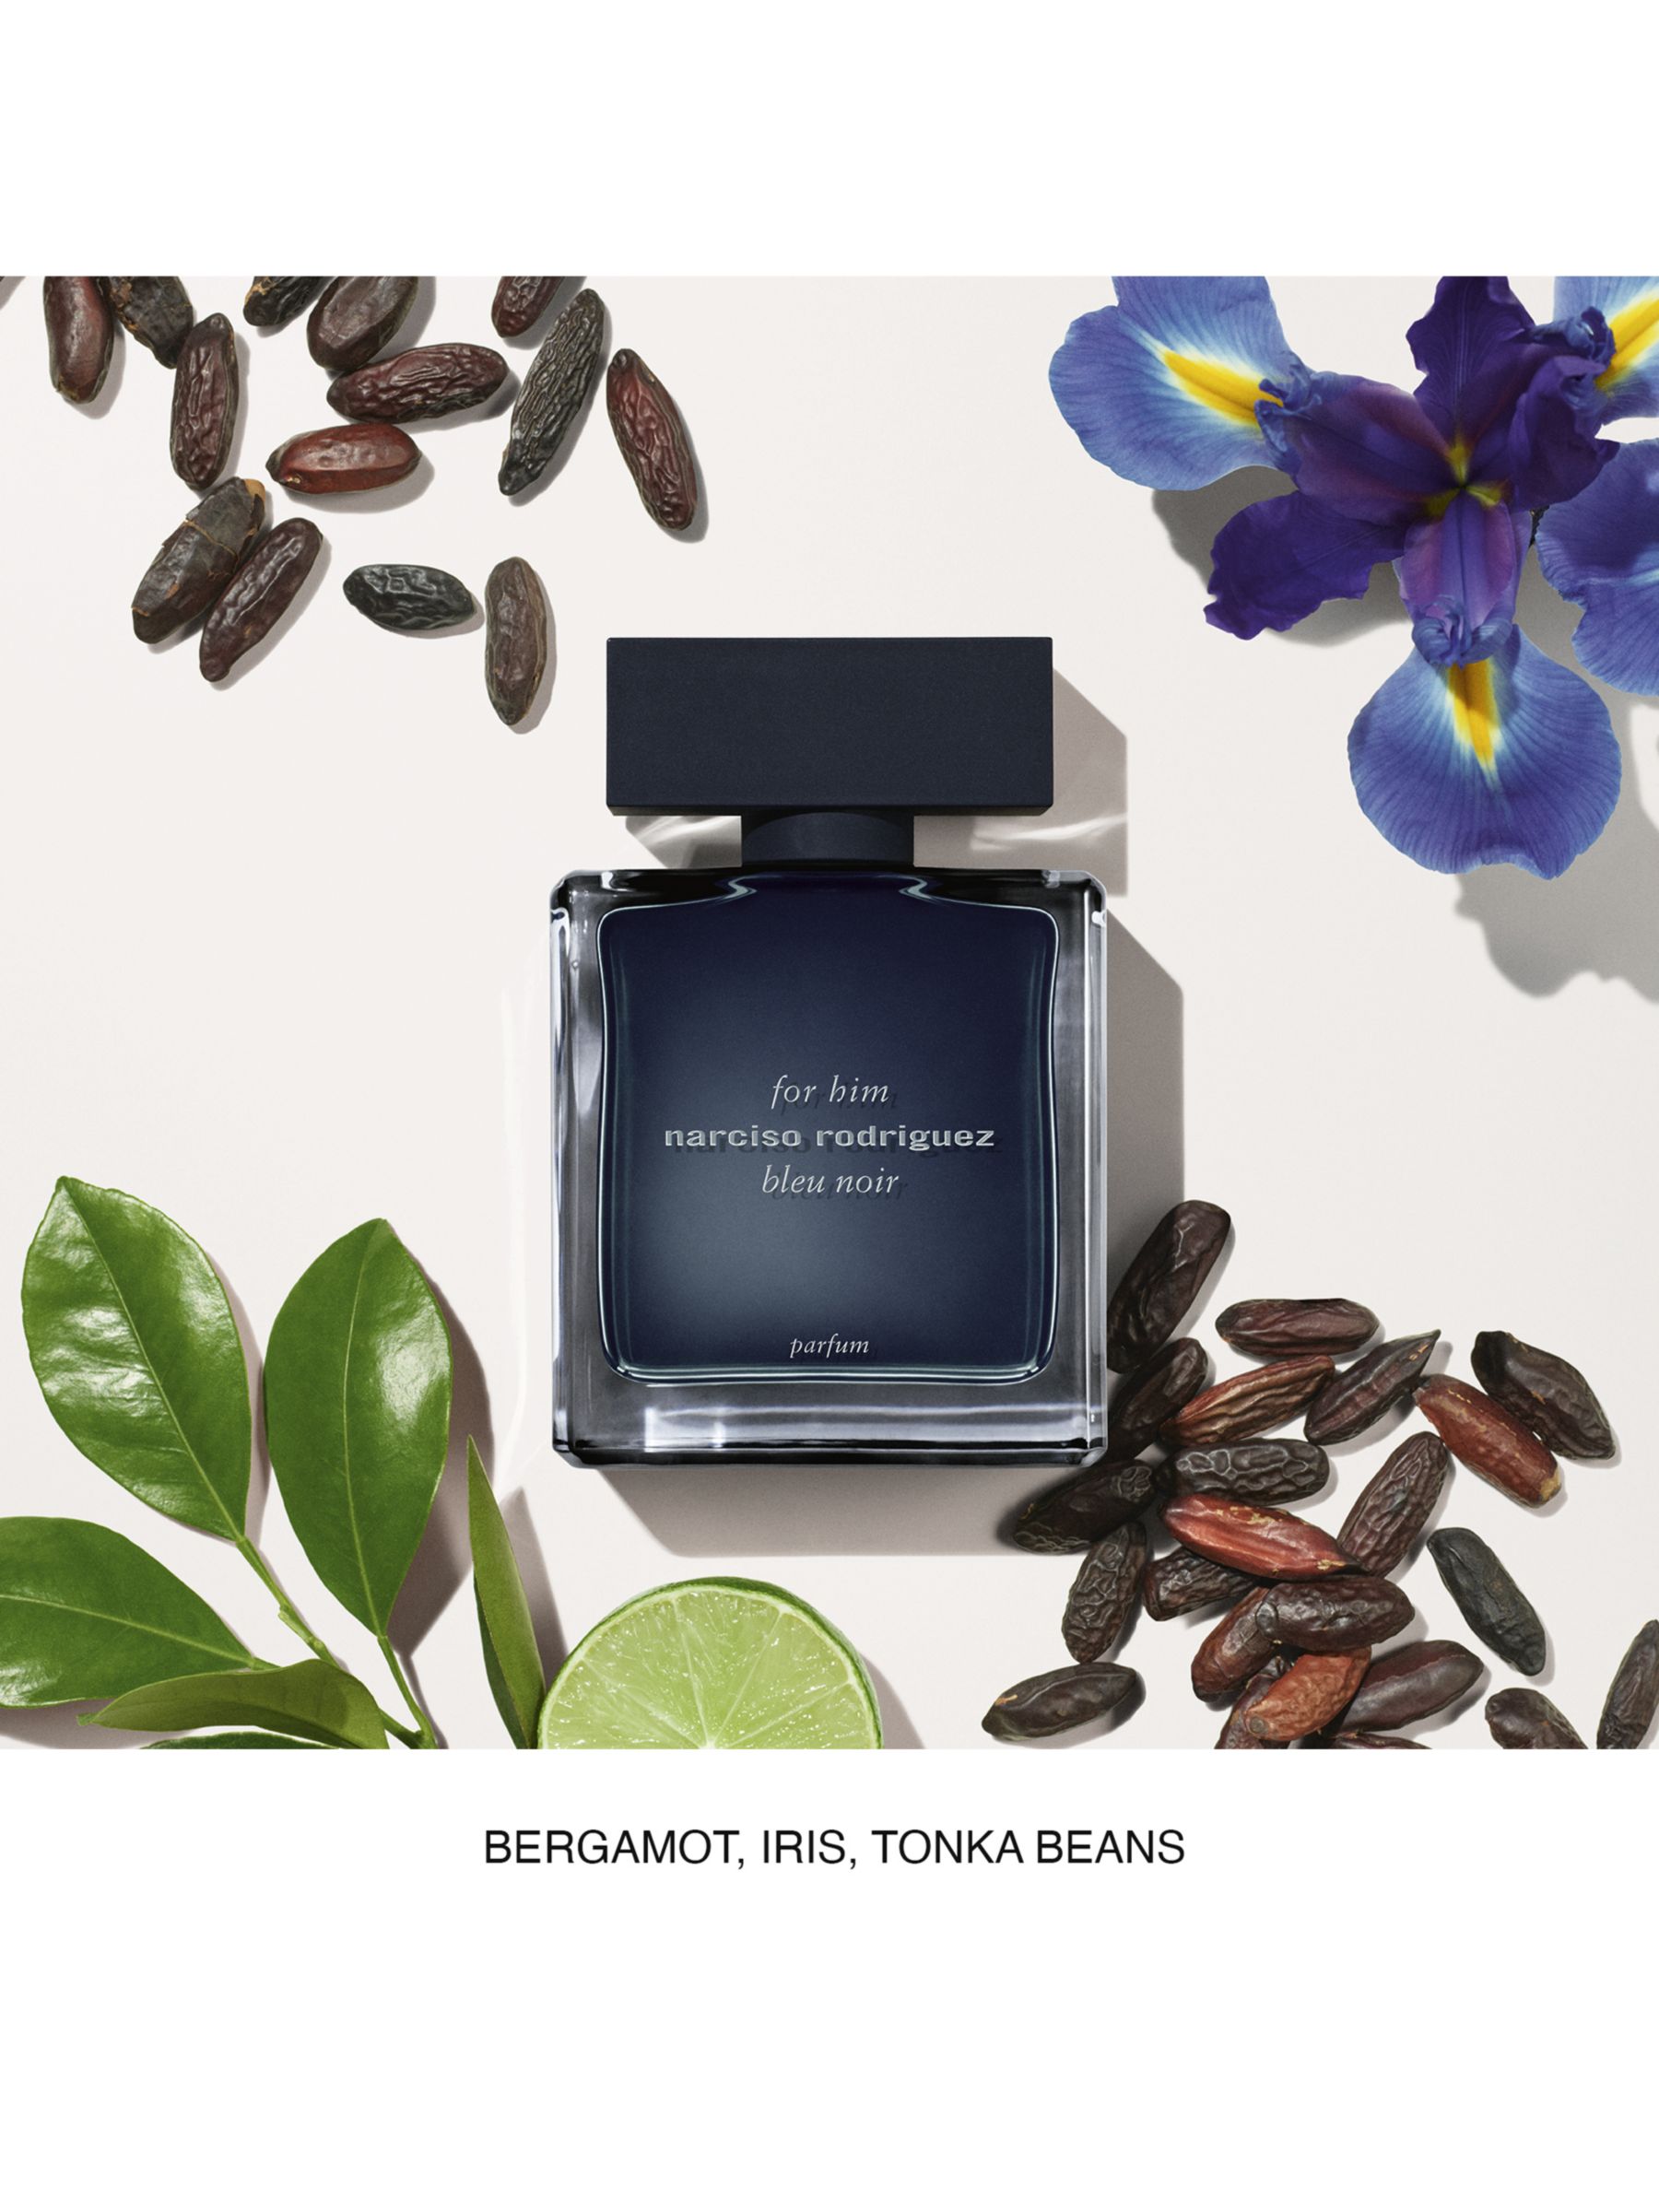 Narciso Rodriguez For Him Bleu Noir Parfum, 50ml